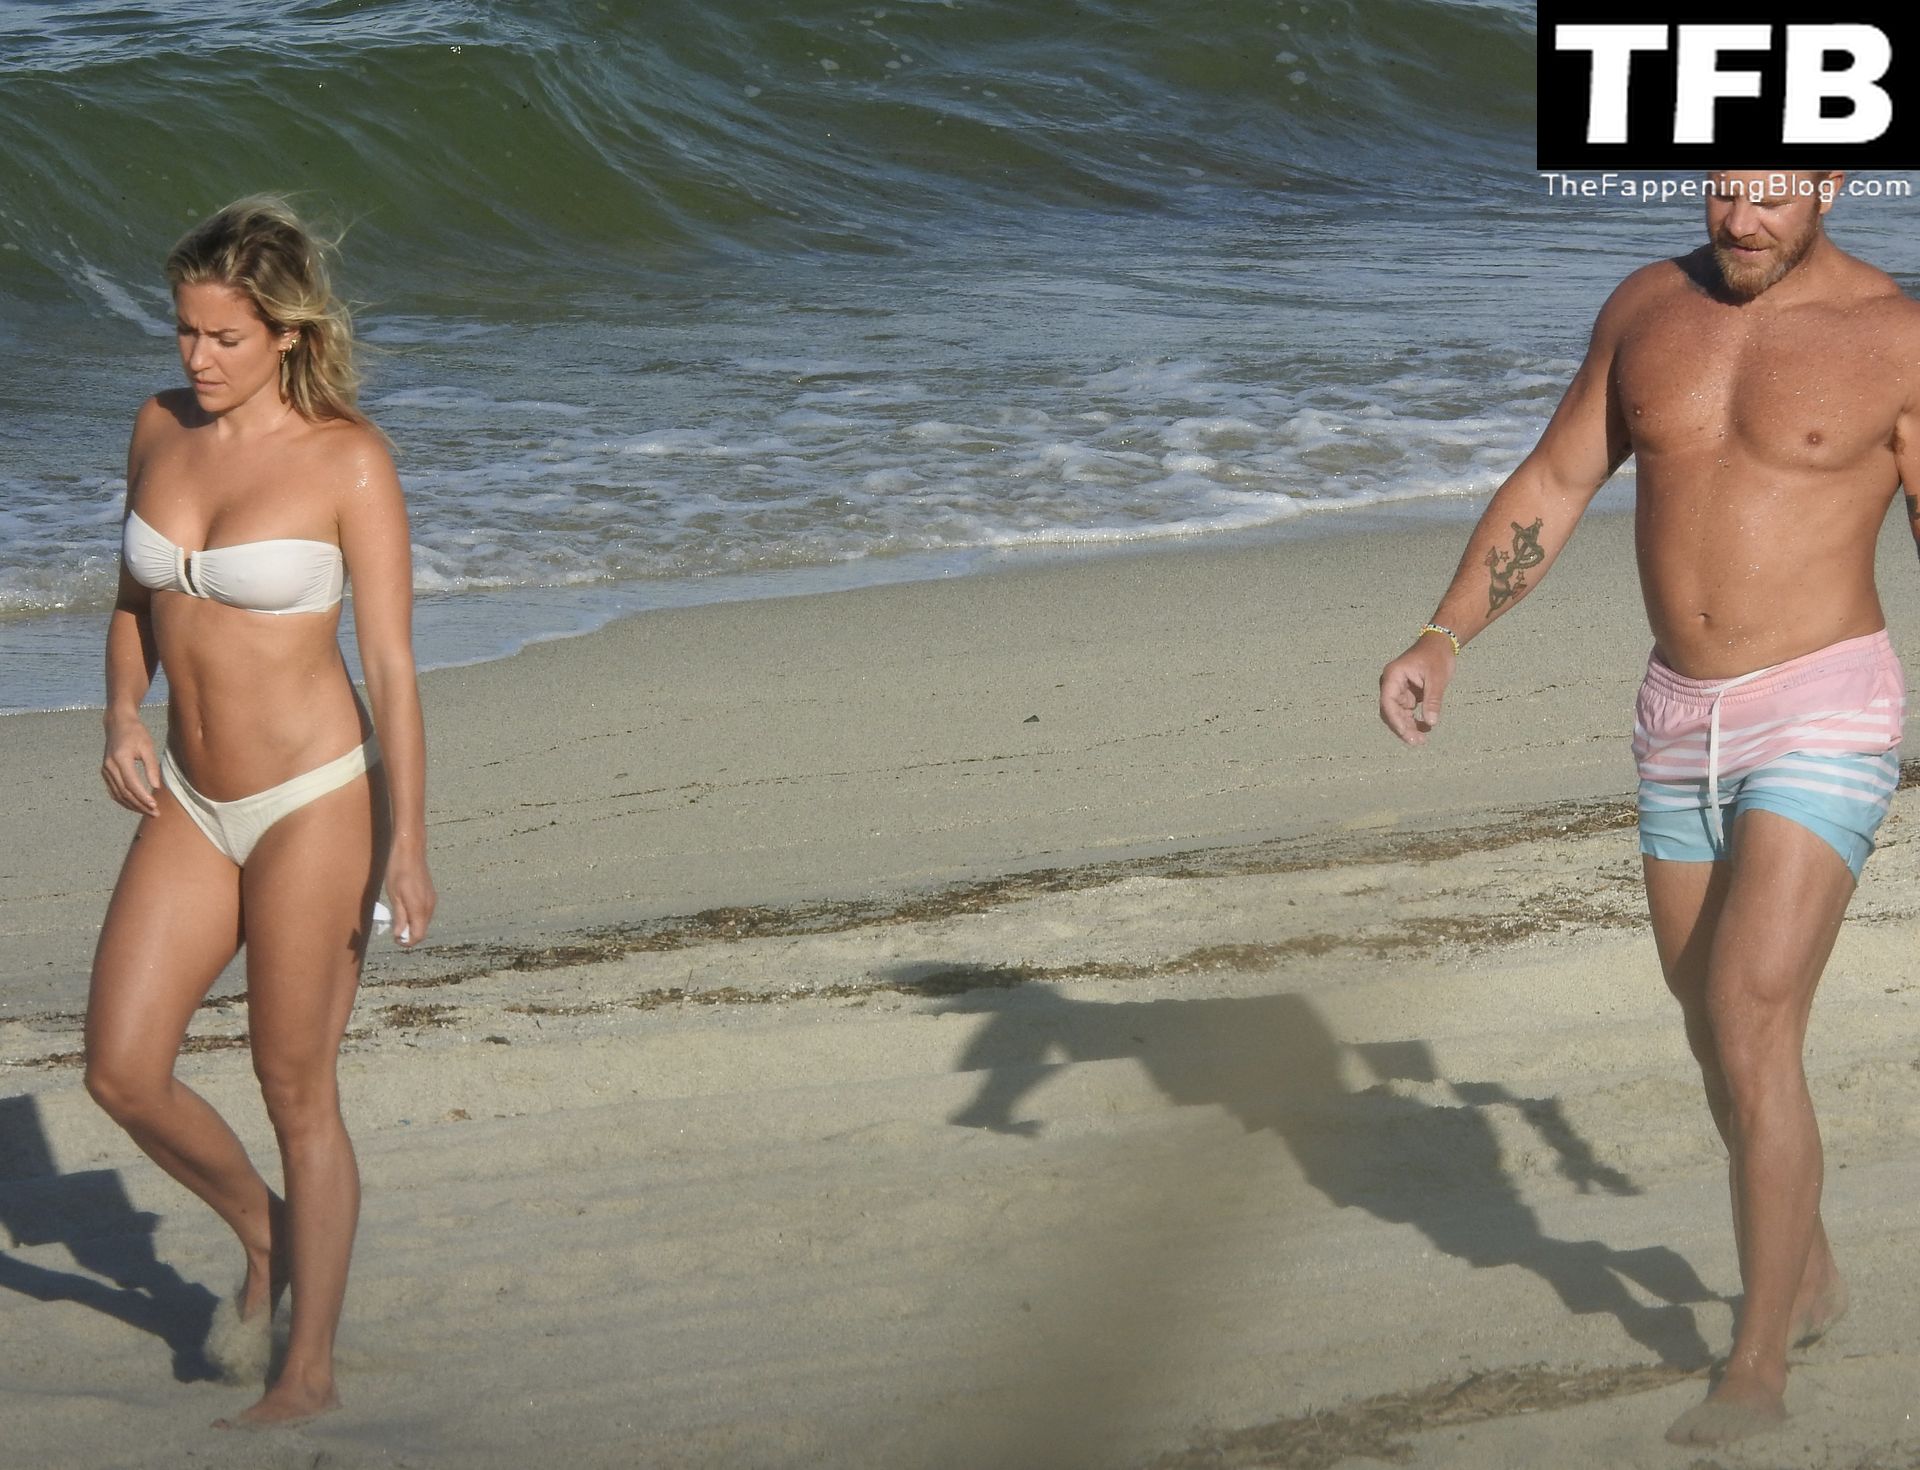 Kristin Cavallari Looks Incredible as She Takes a Dip in the Ocean in a Whi...